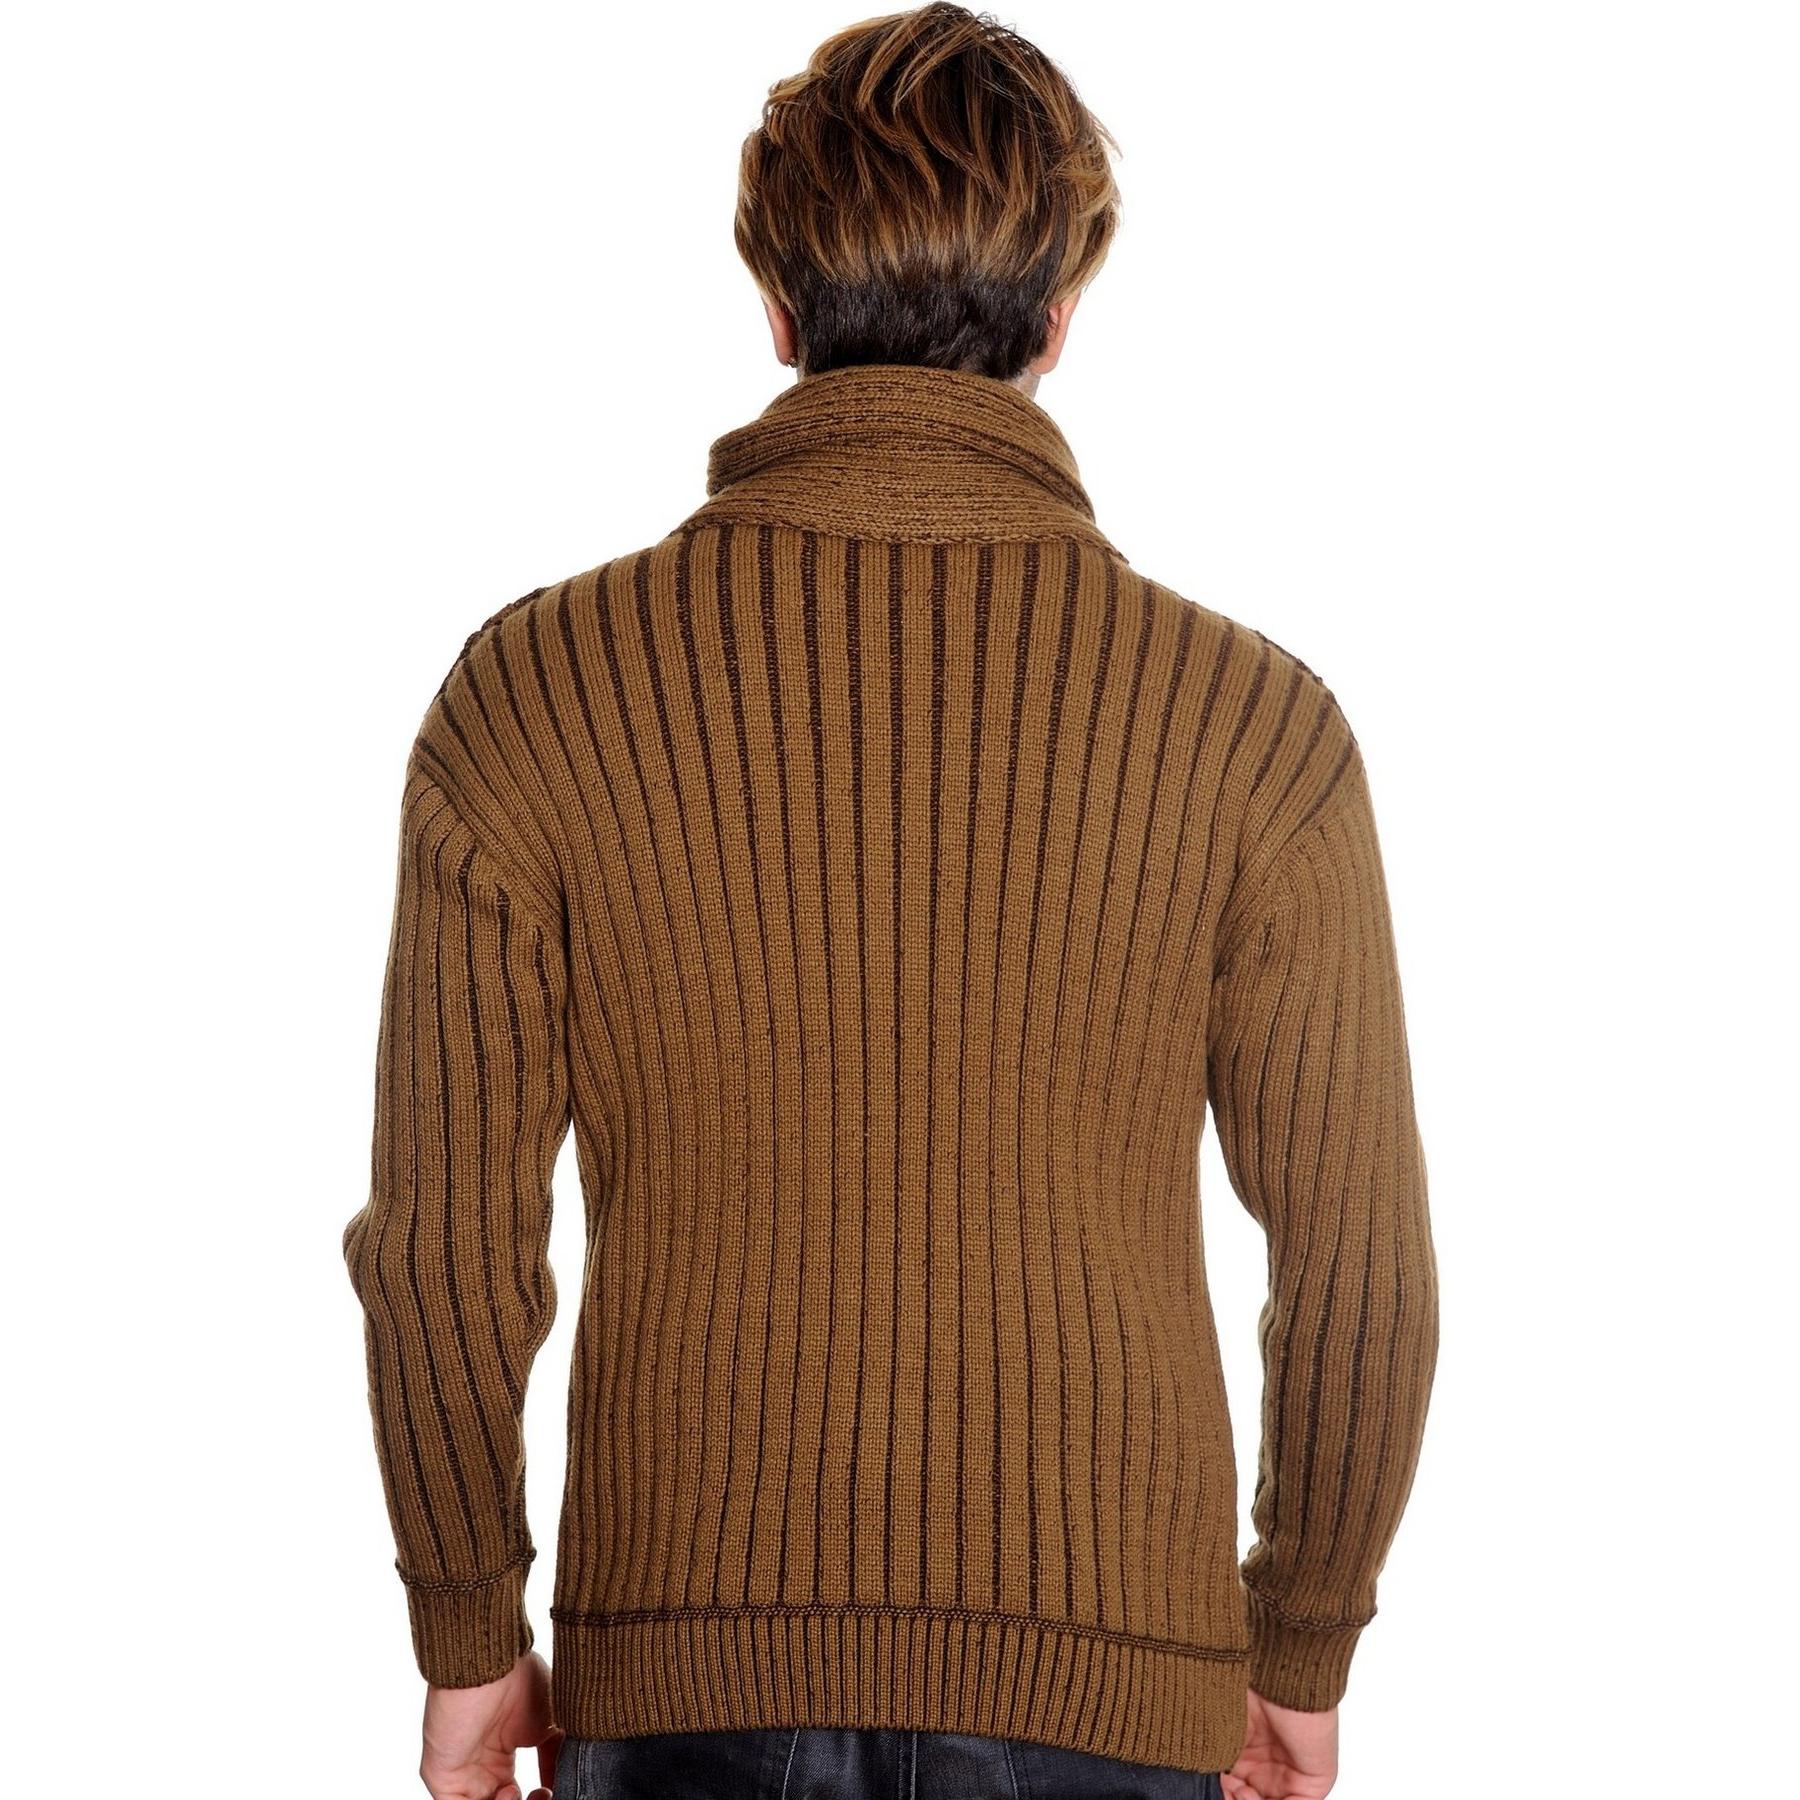 LCR Dark Camel / Brown Classic Fit Wool Blend Shawl Collar Cardigan Sweater 5860C - $119.90